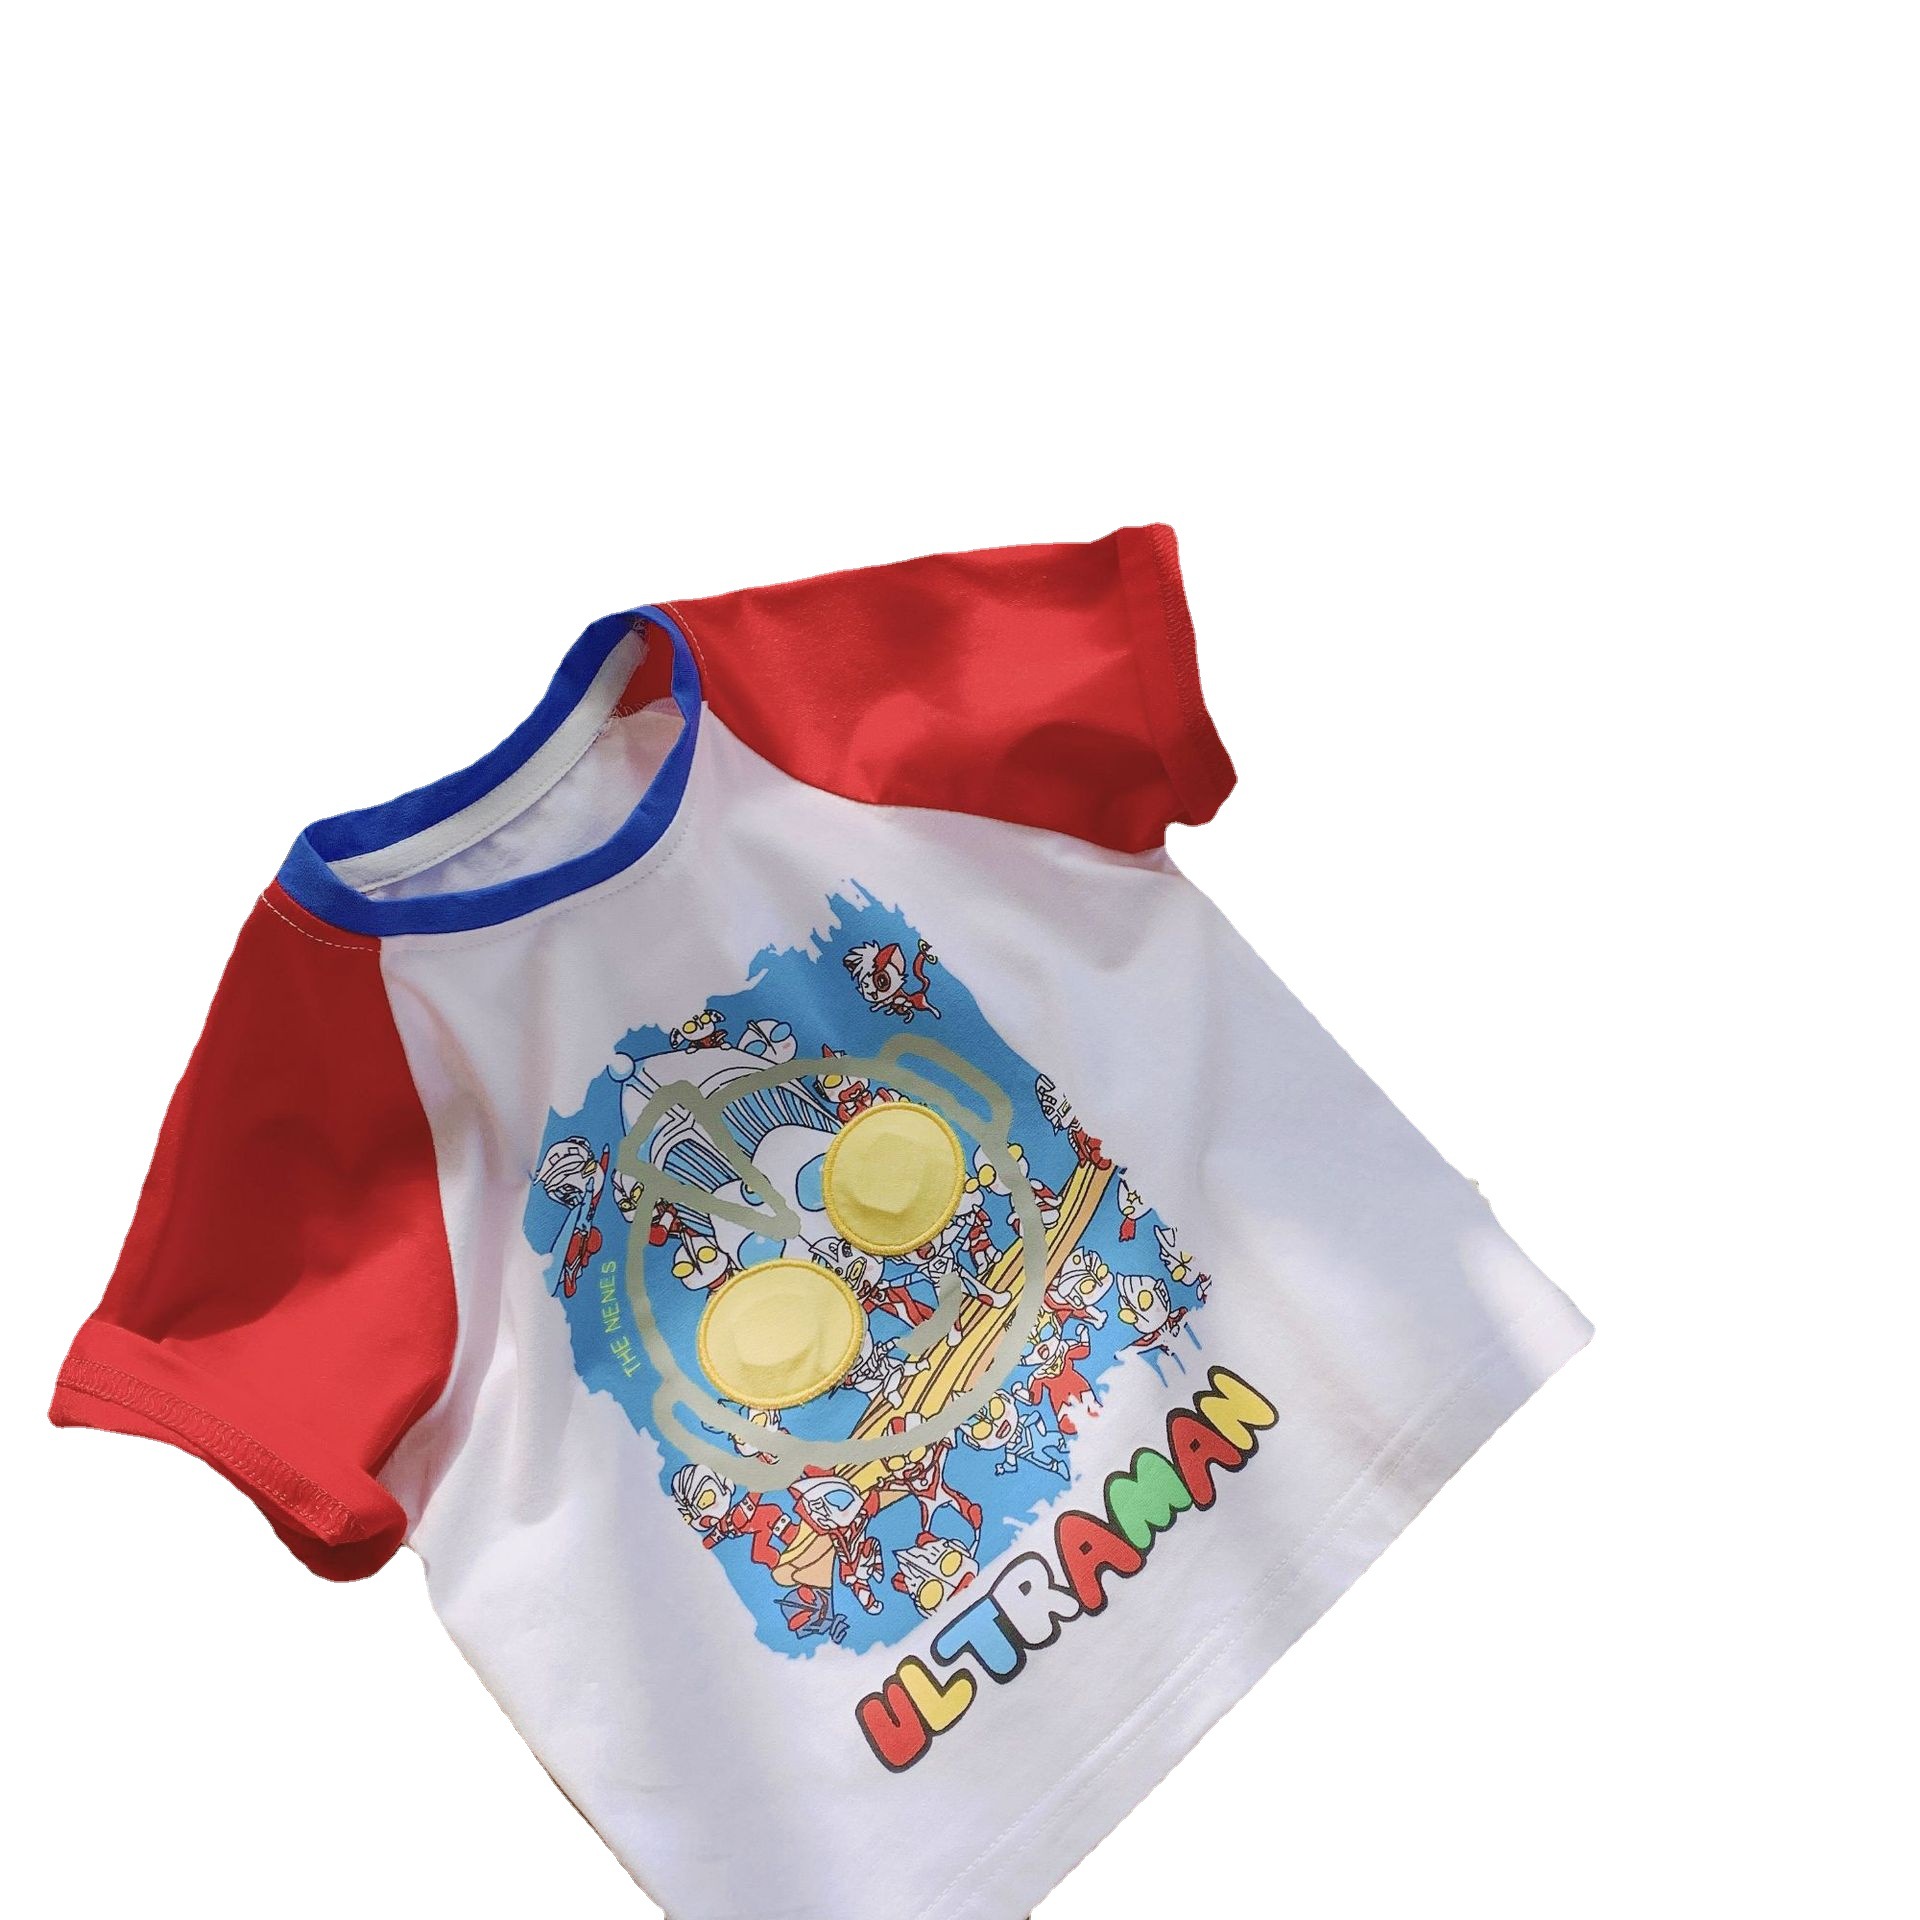 Children's Clothing Pure Cotton Cartoon Boys' and Girls' Shirt round Neck Stitching Short Sleeve Light Light Luminous Ultraman Luminous